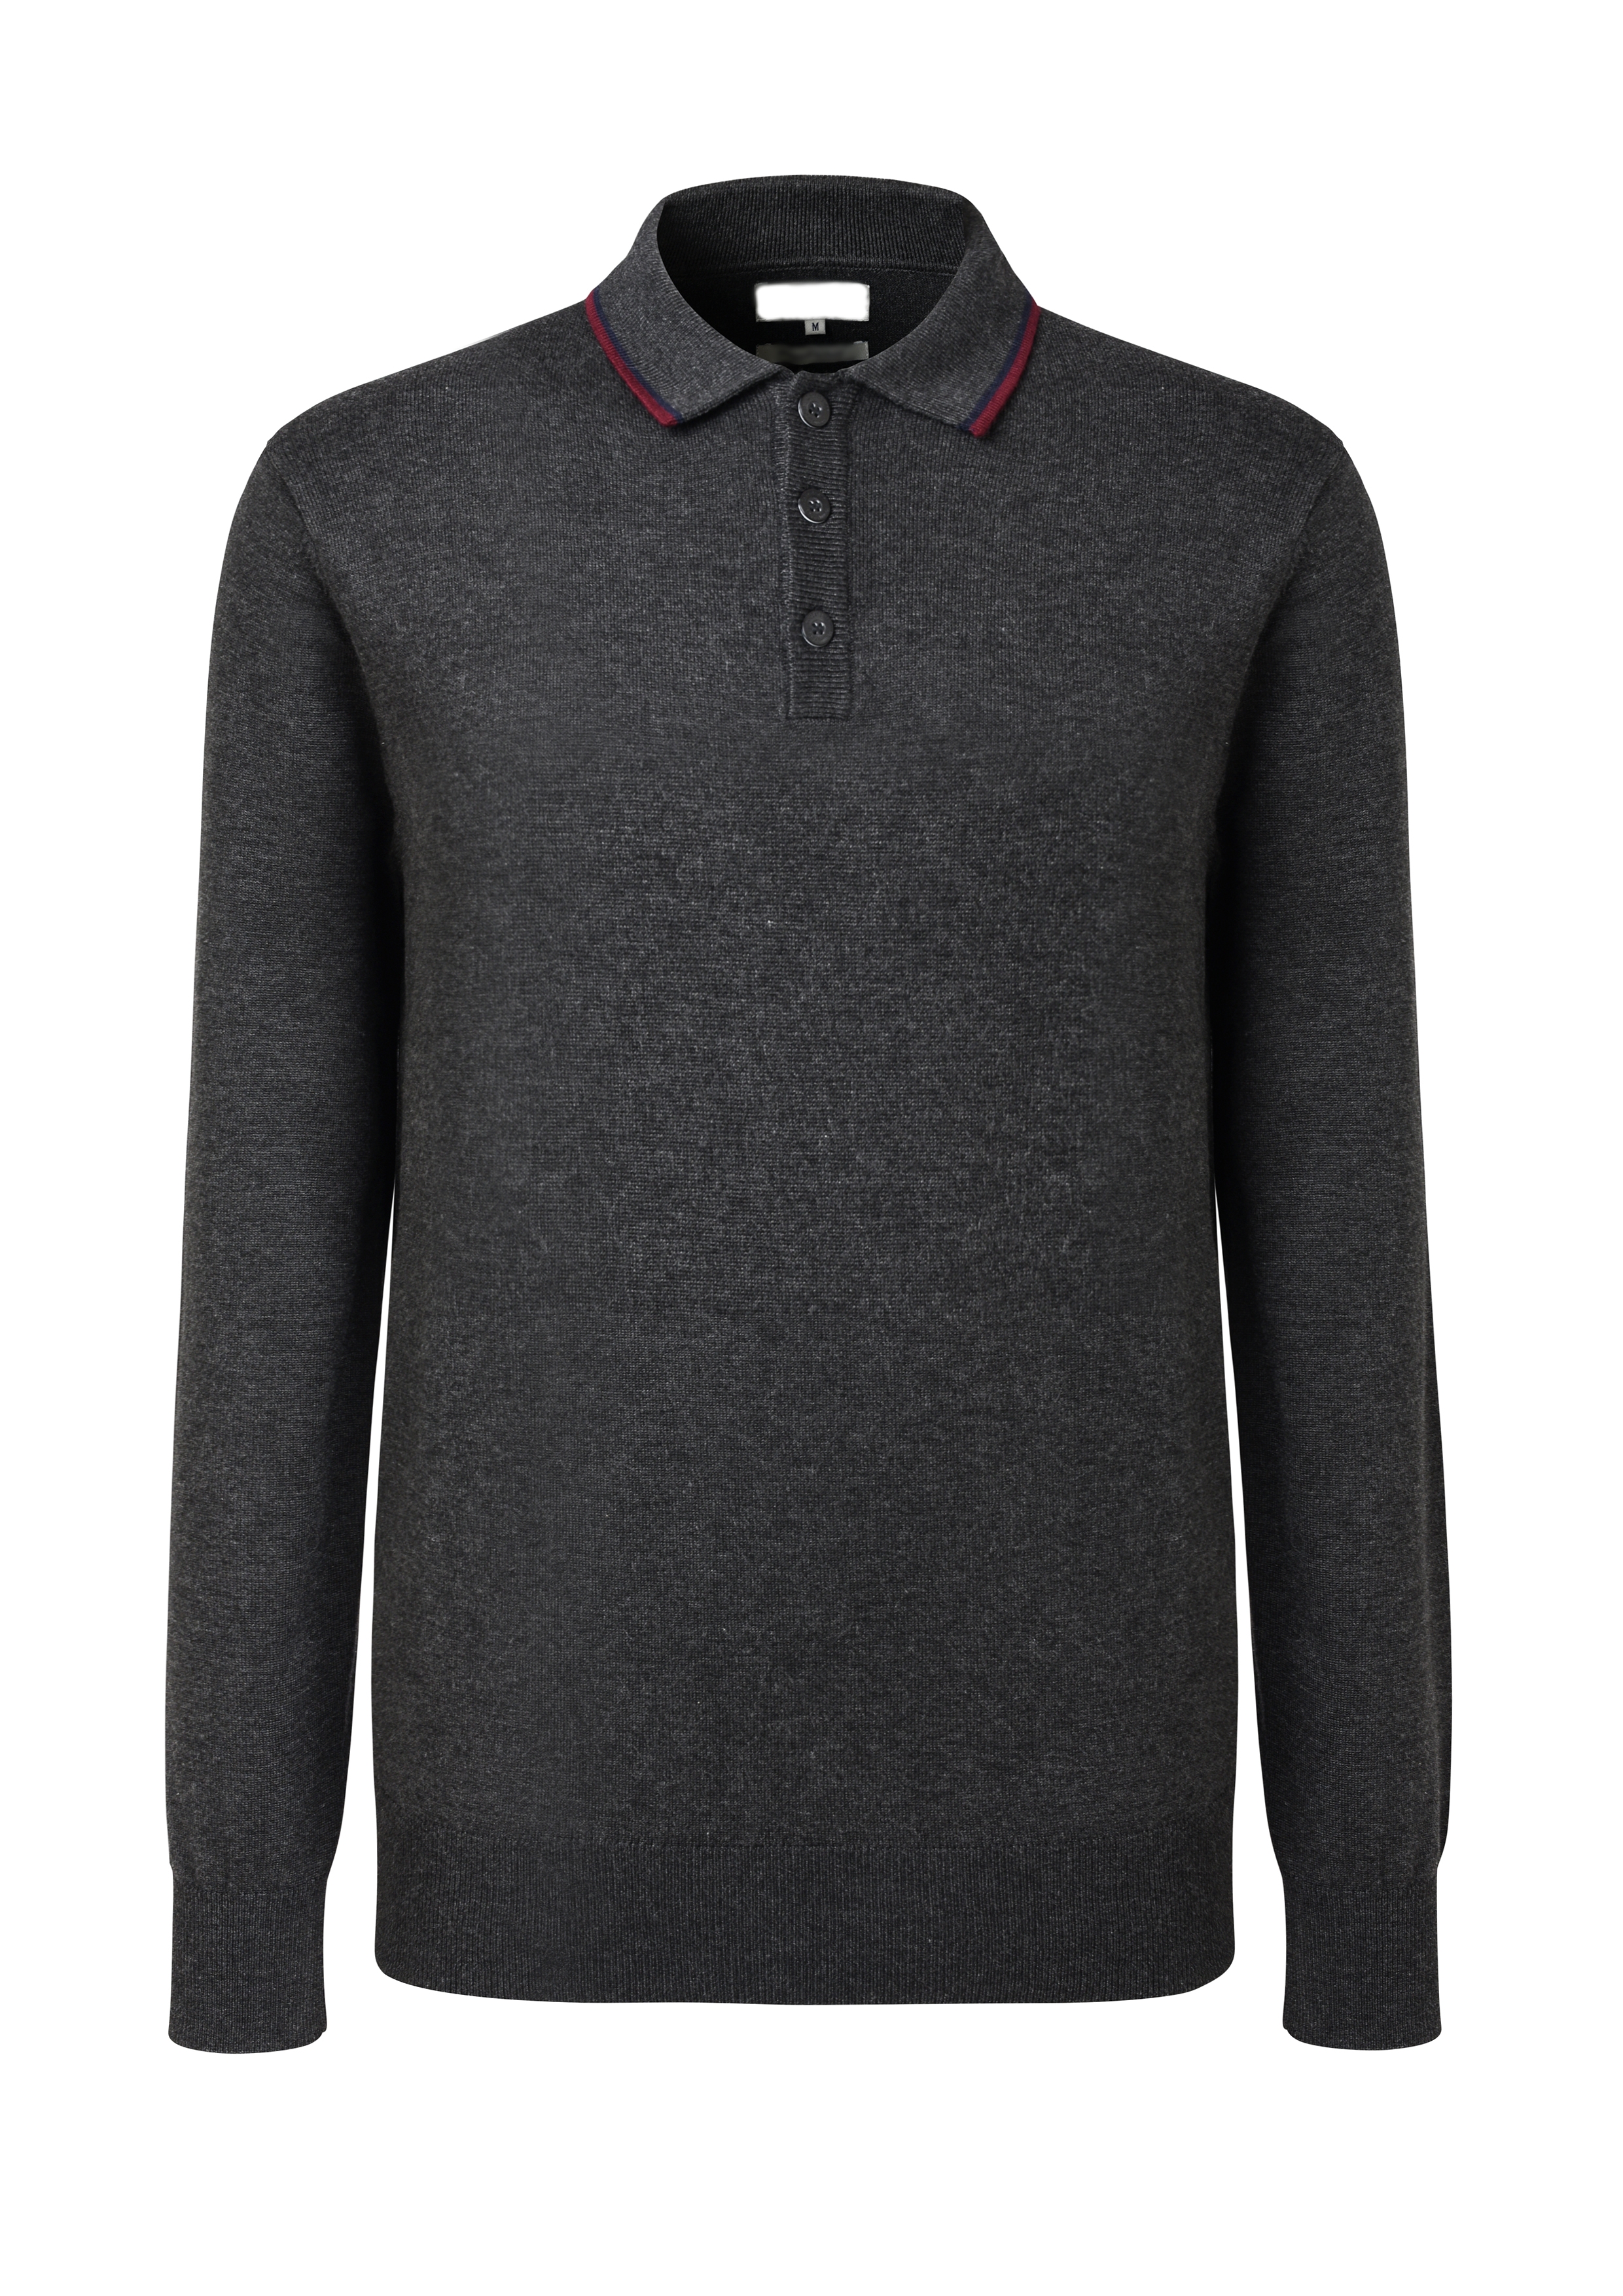 OEM Design Black Hand Knitted Long Sleeve 100% Wool Men's Lapel Crewneck Sweater 